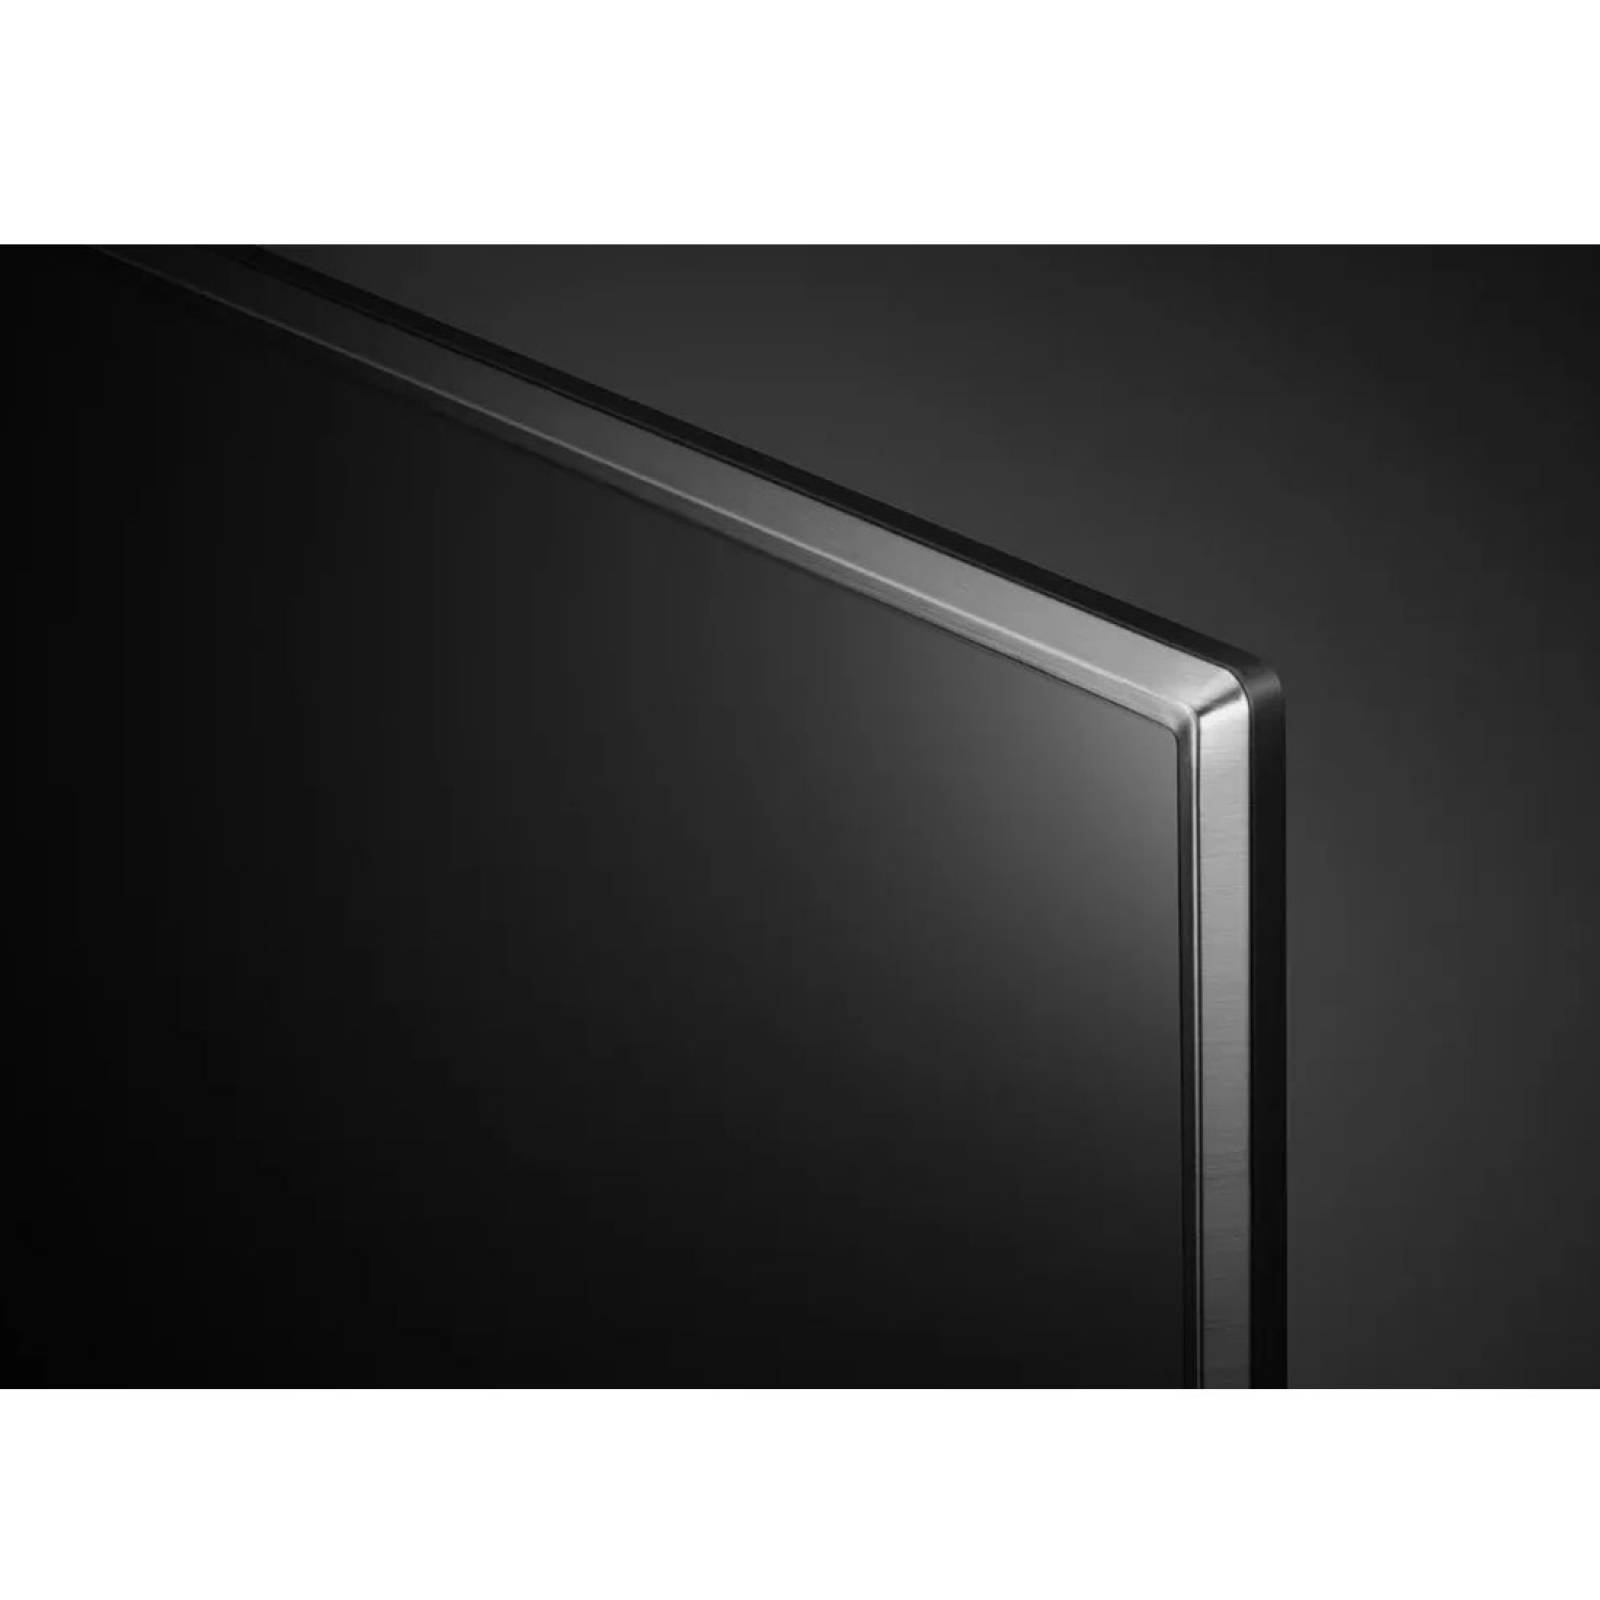 LG Smart Tv 4K HDR FullHD  Reacondicionado